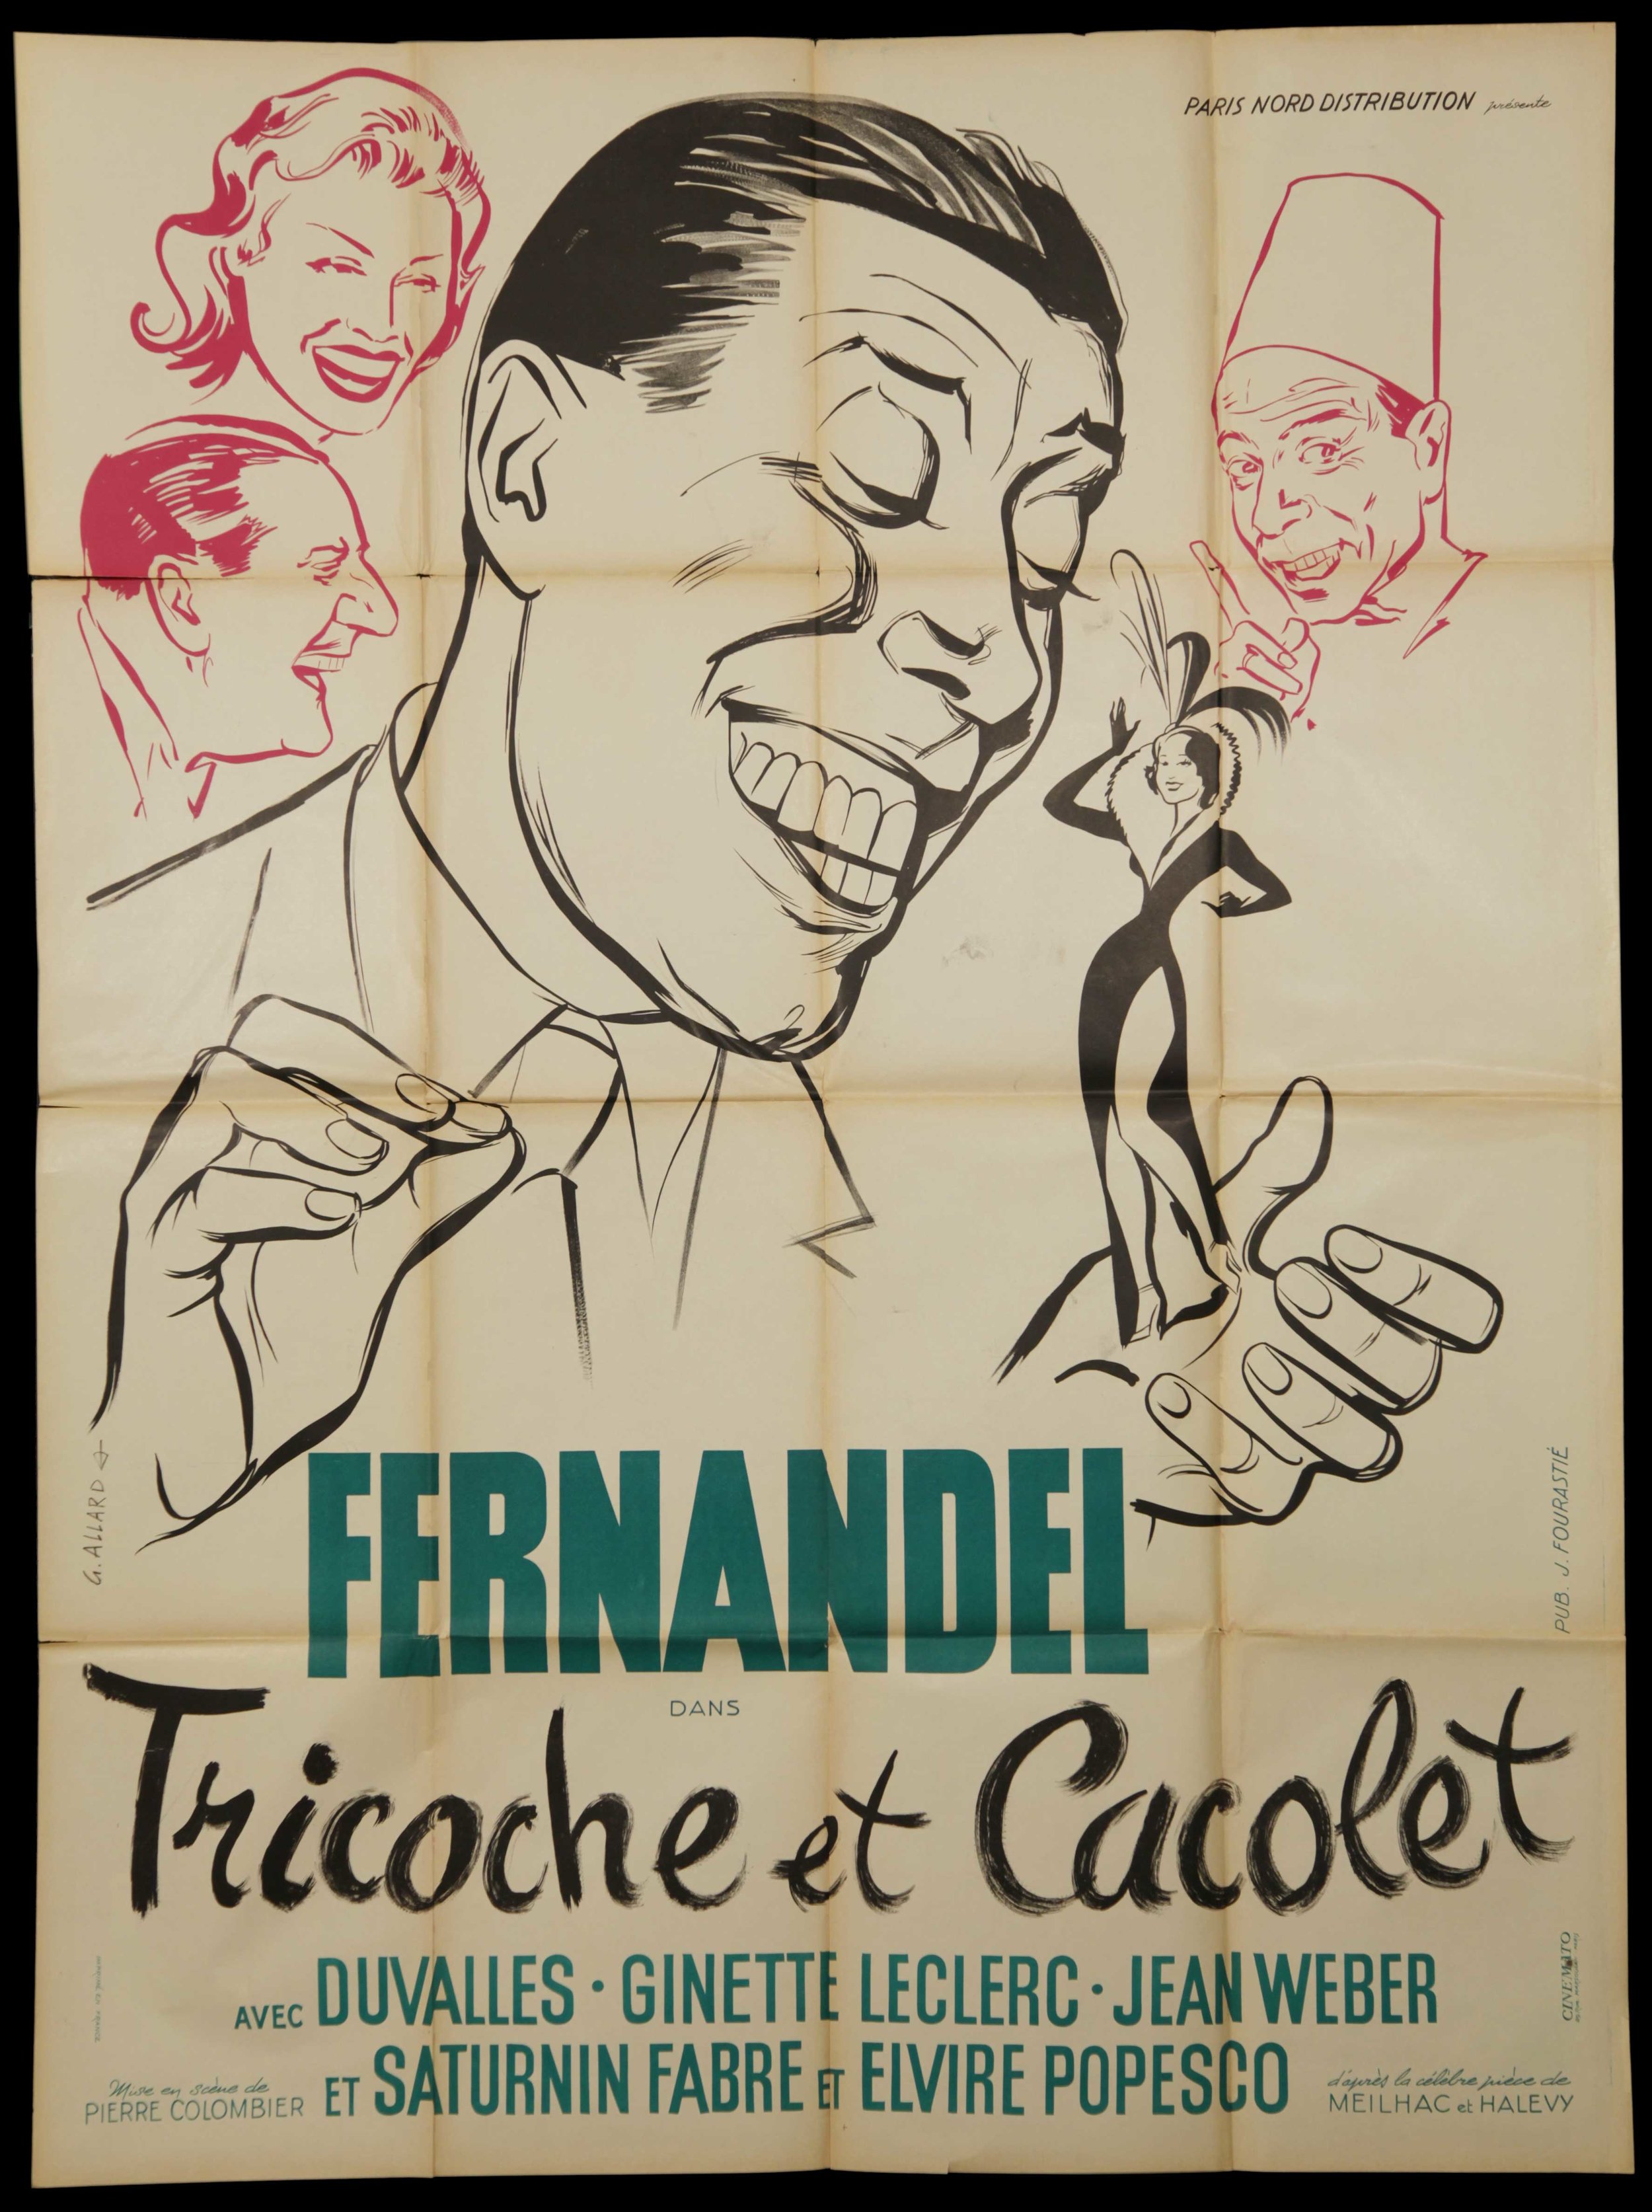 Fernadel in Tricoch Et Cacolet (1938)